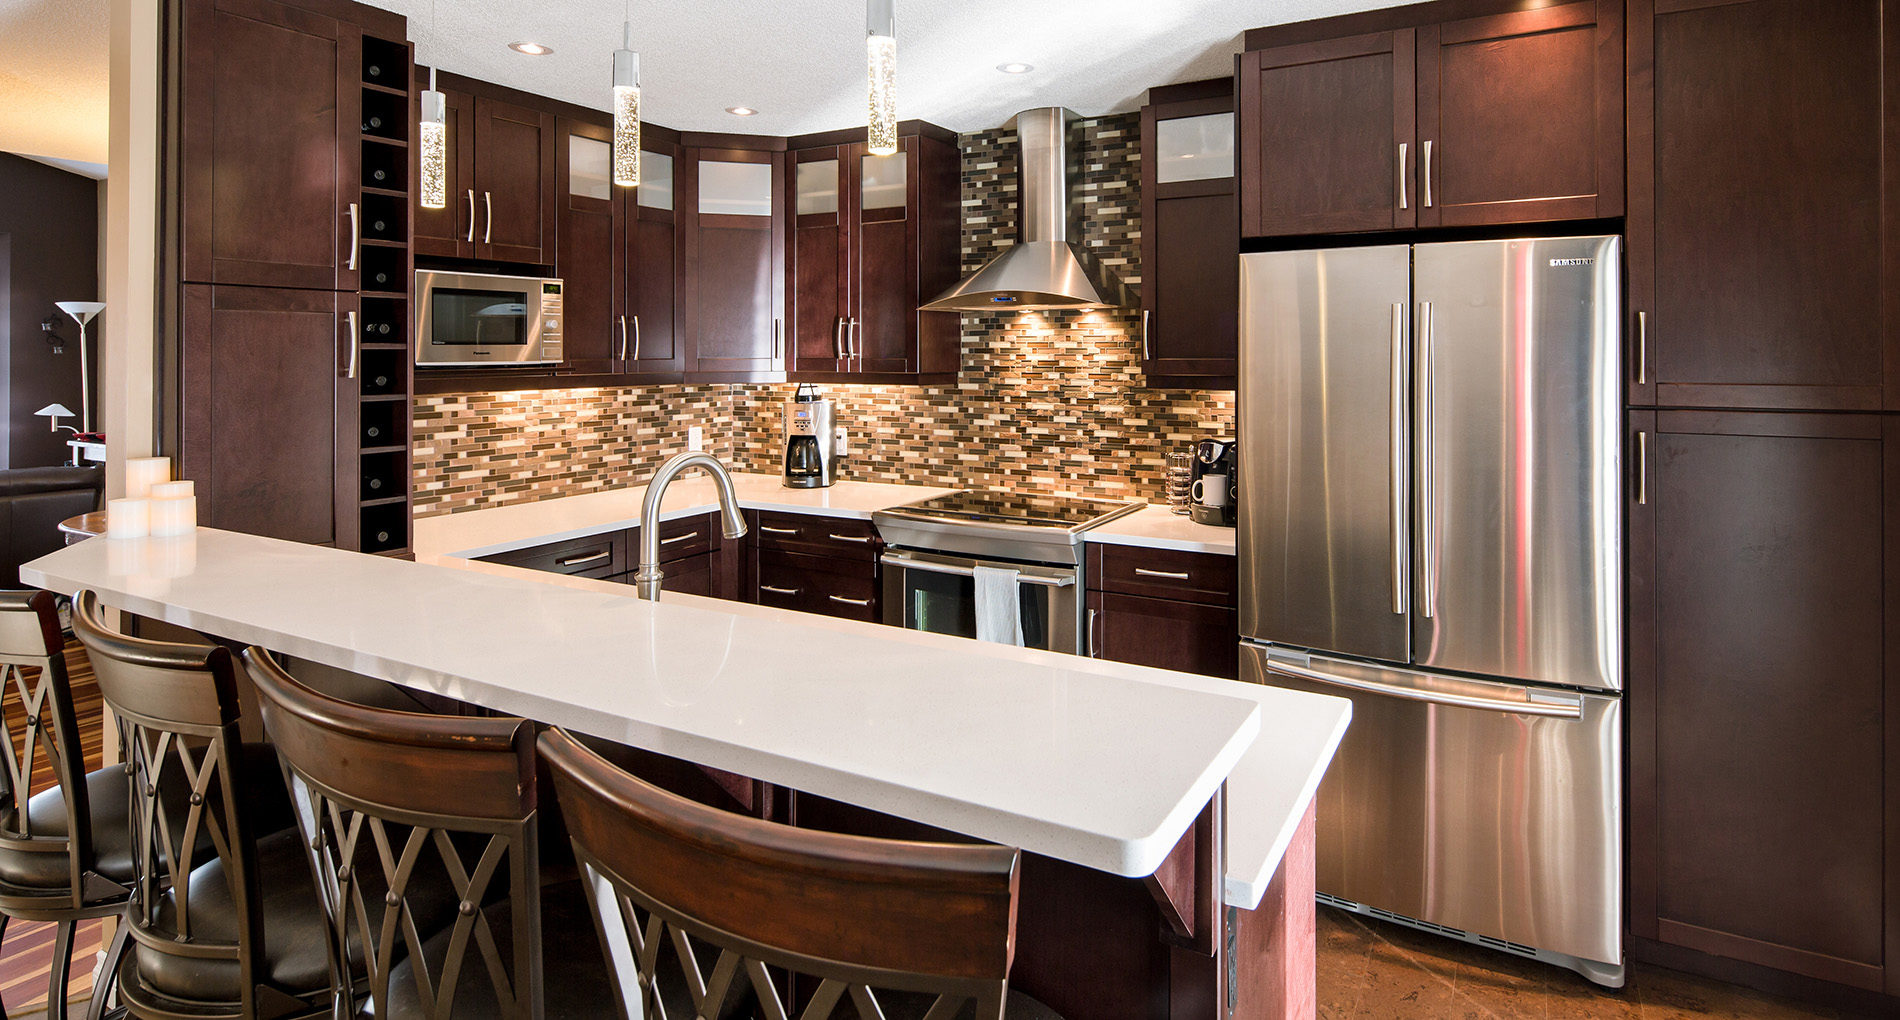 Kitchen Renovations & Design in Calgary | Alair Homes Calgary